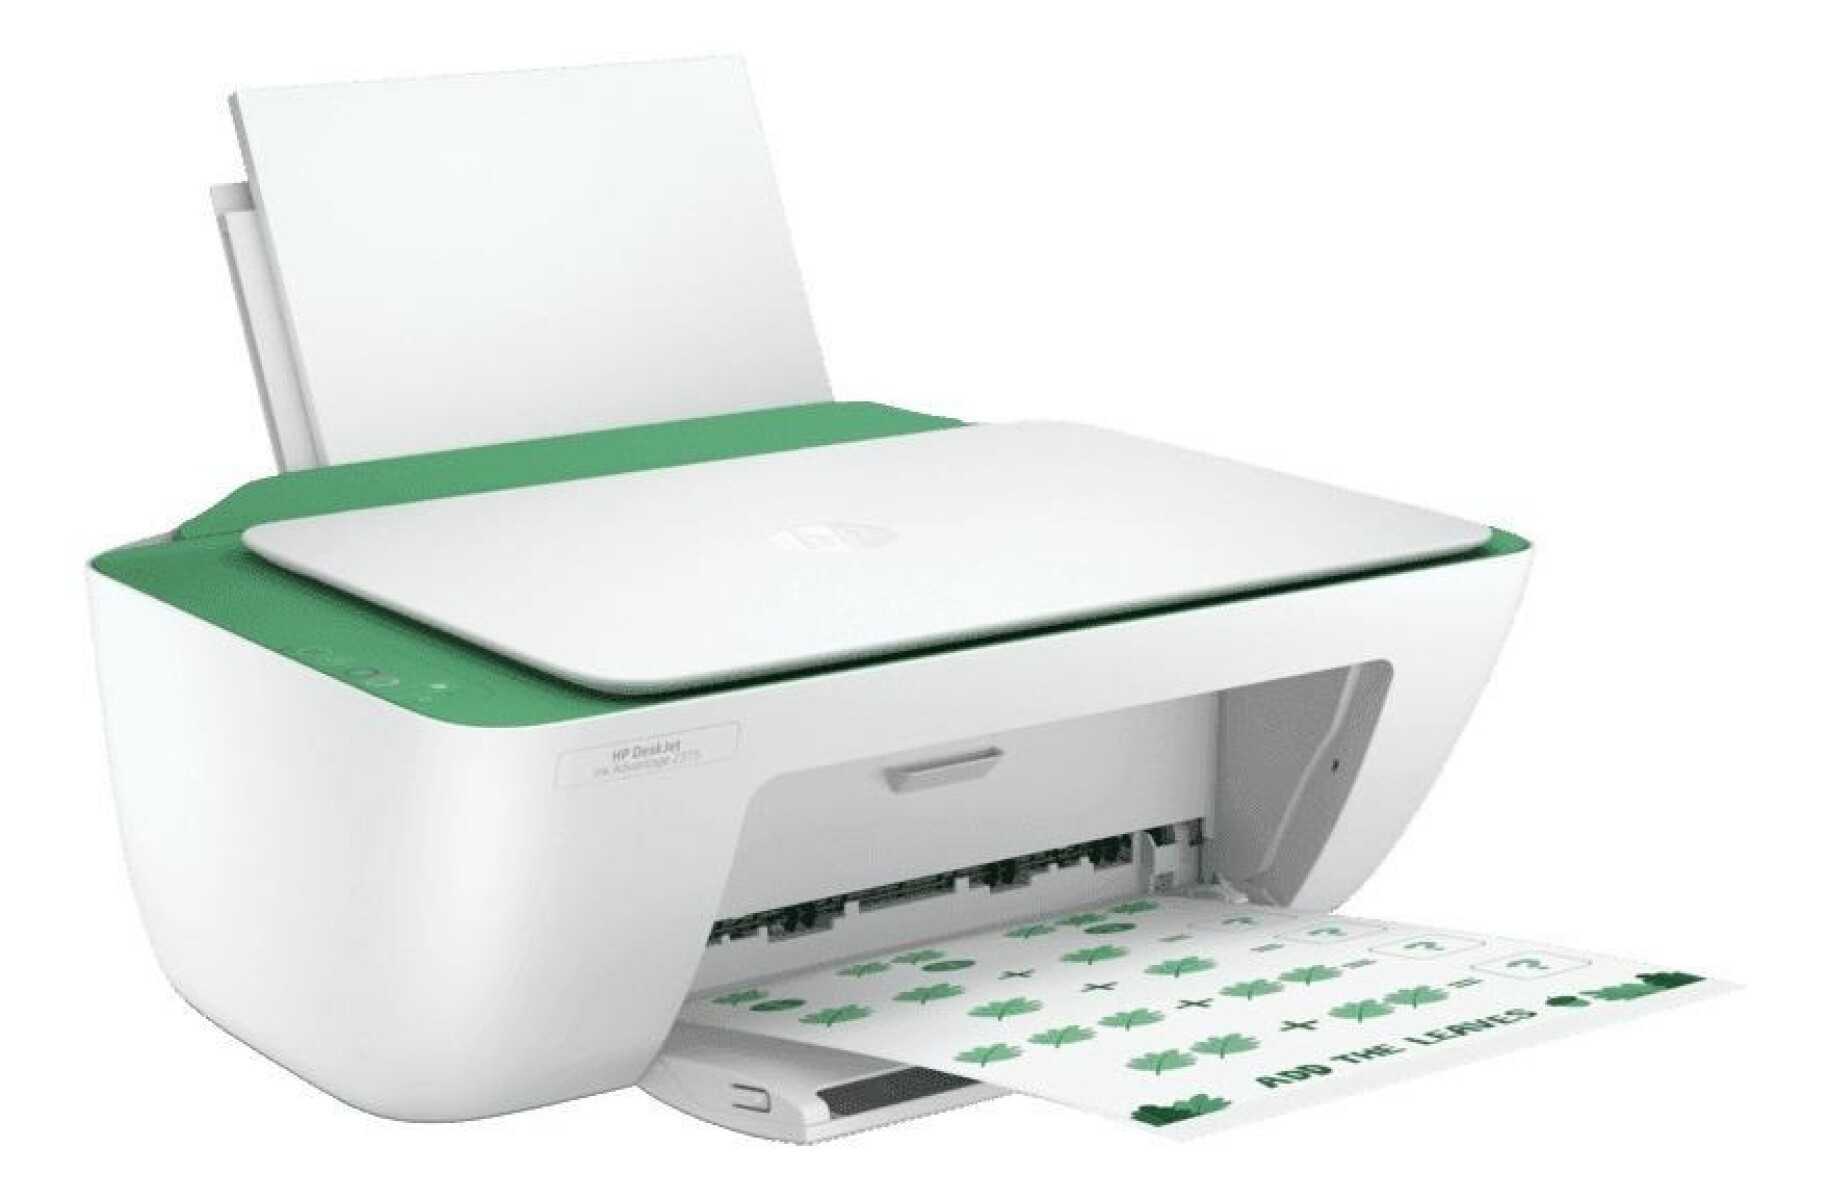 Impresora Color Hp Deskjet Ink Advantage 2375 Blanca Y Verde - 3211 